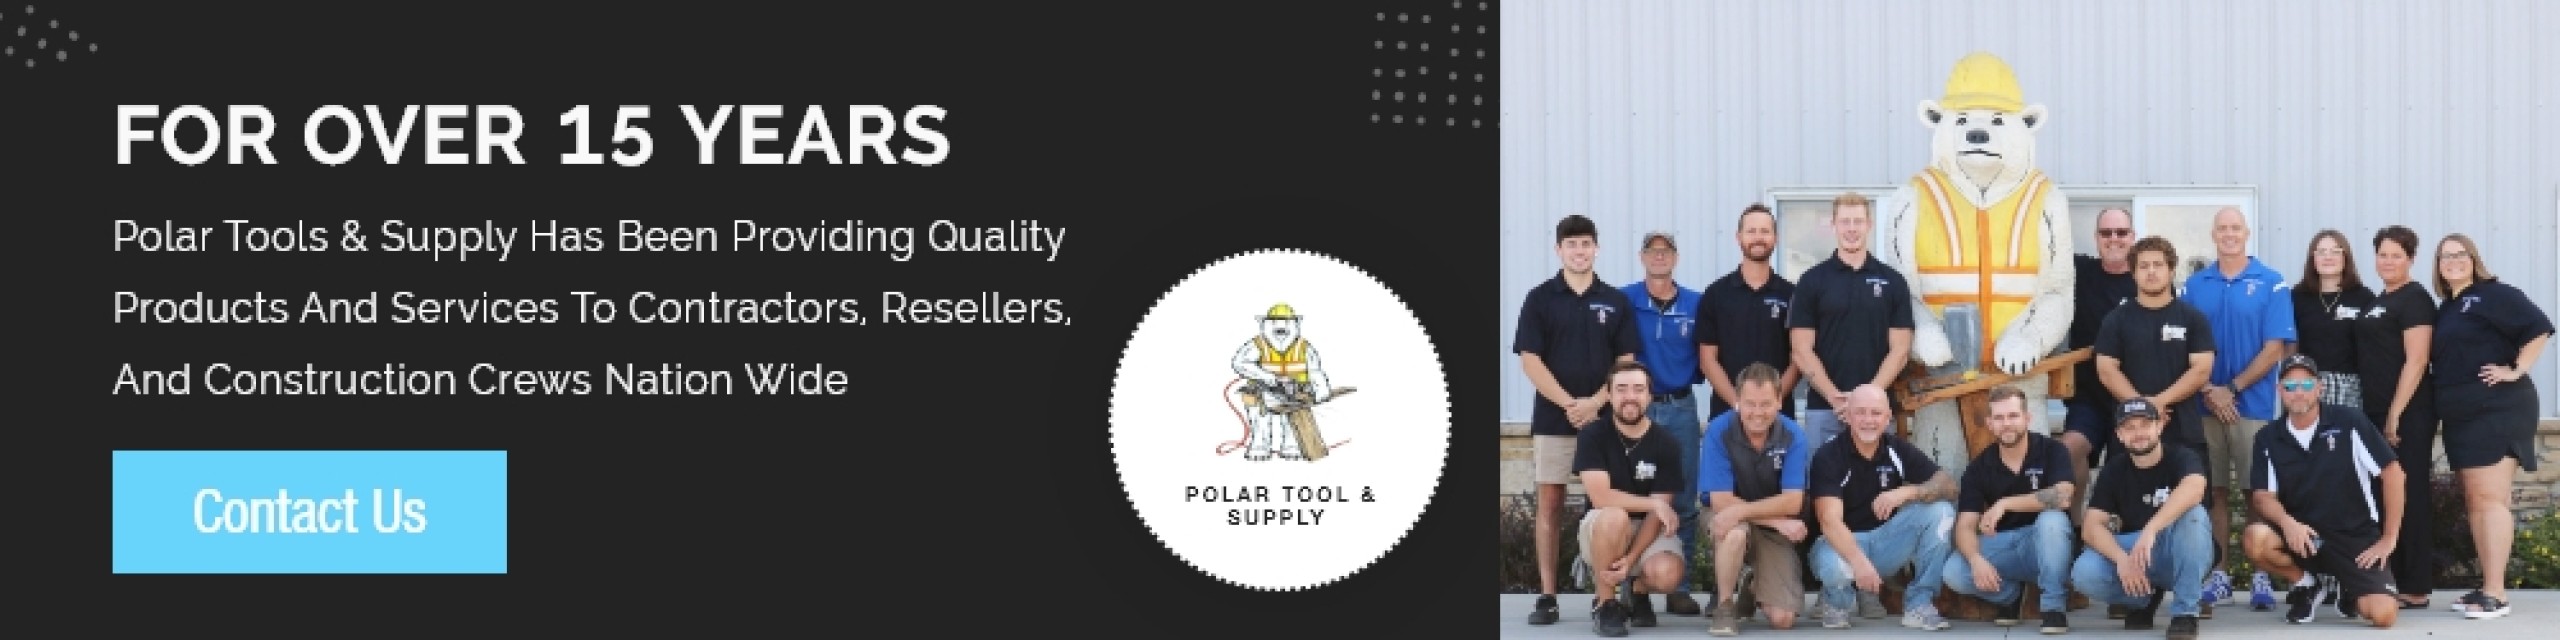 Polar Tool & Supply